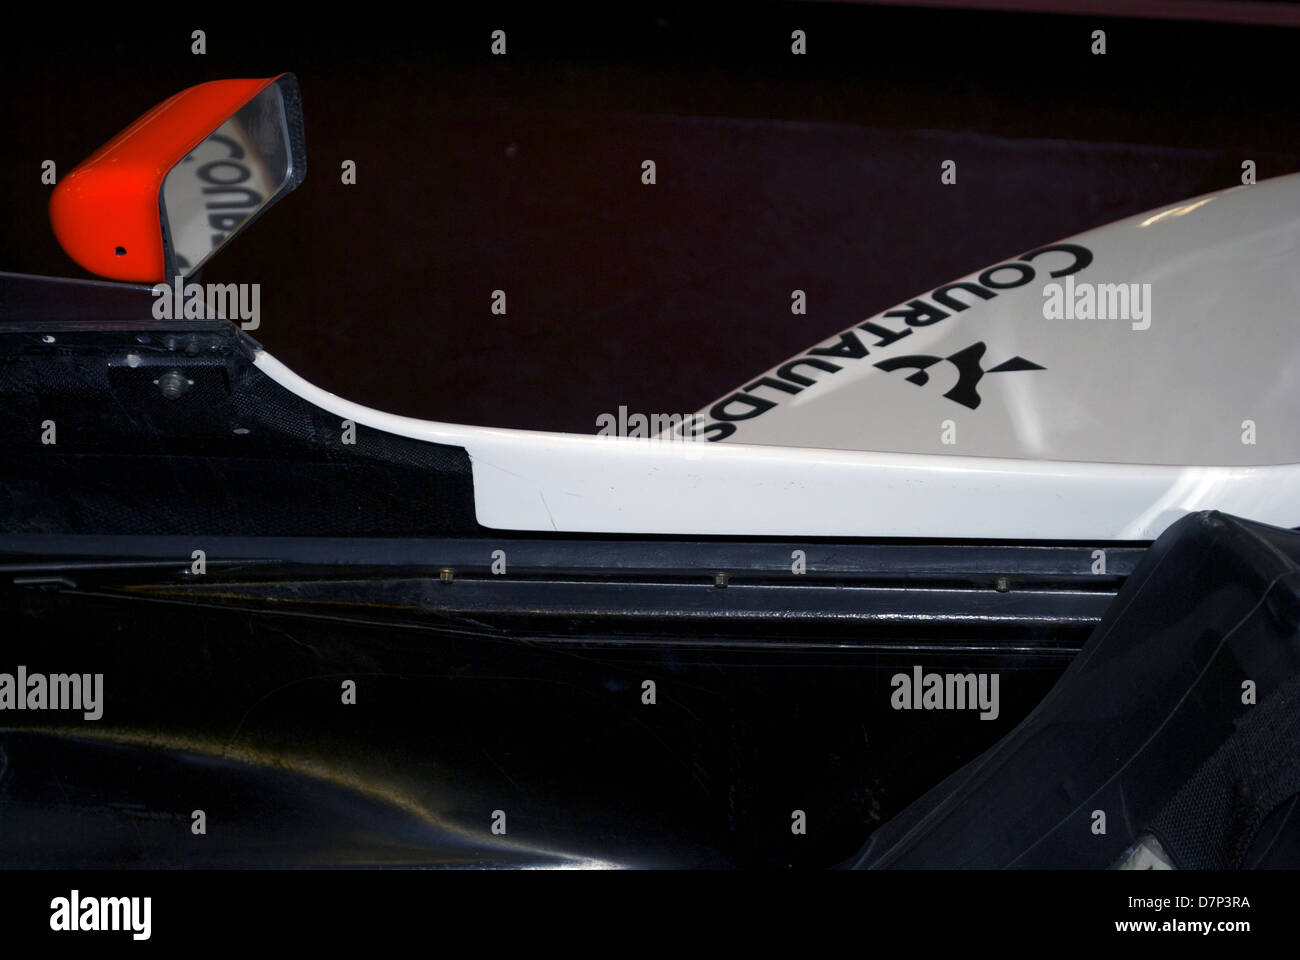 mclaren formula 1 car detail of wing mirror Stock Photo